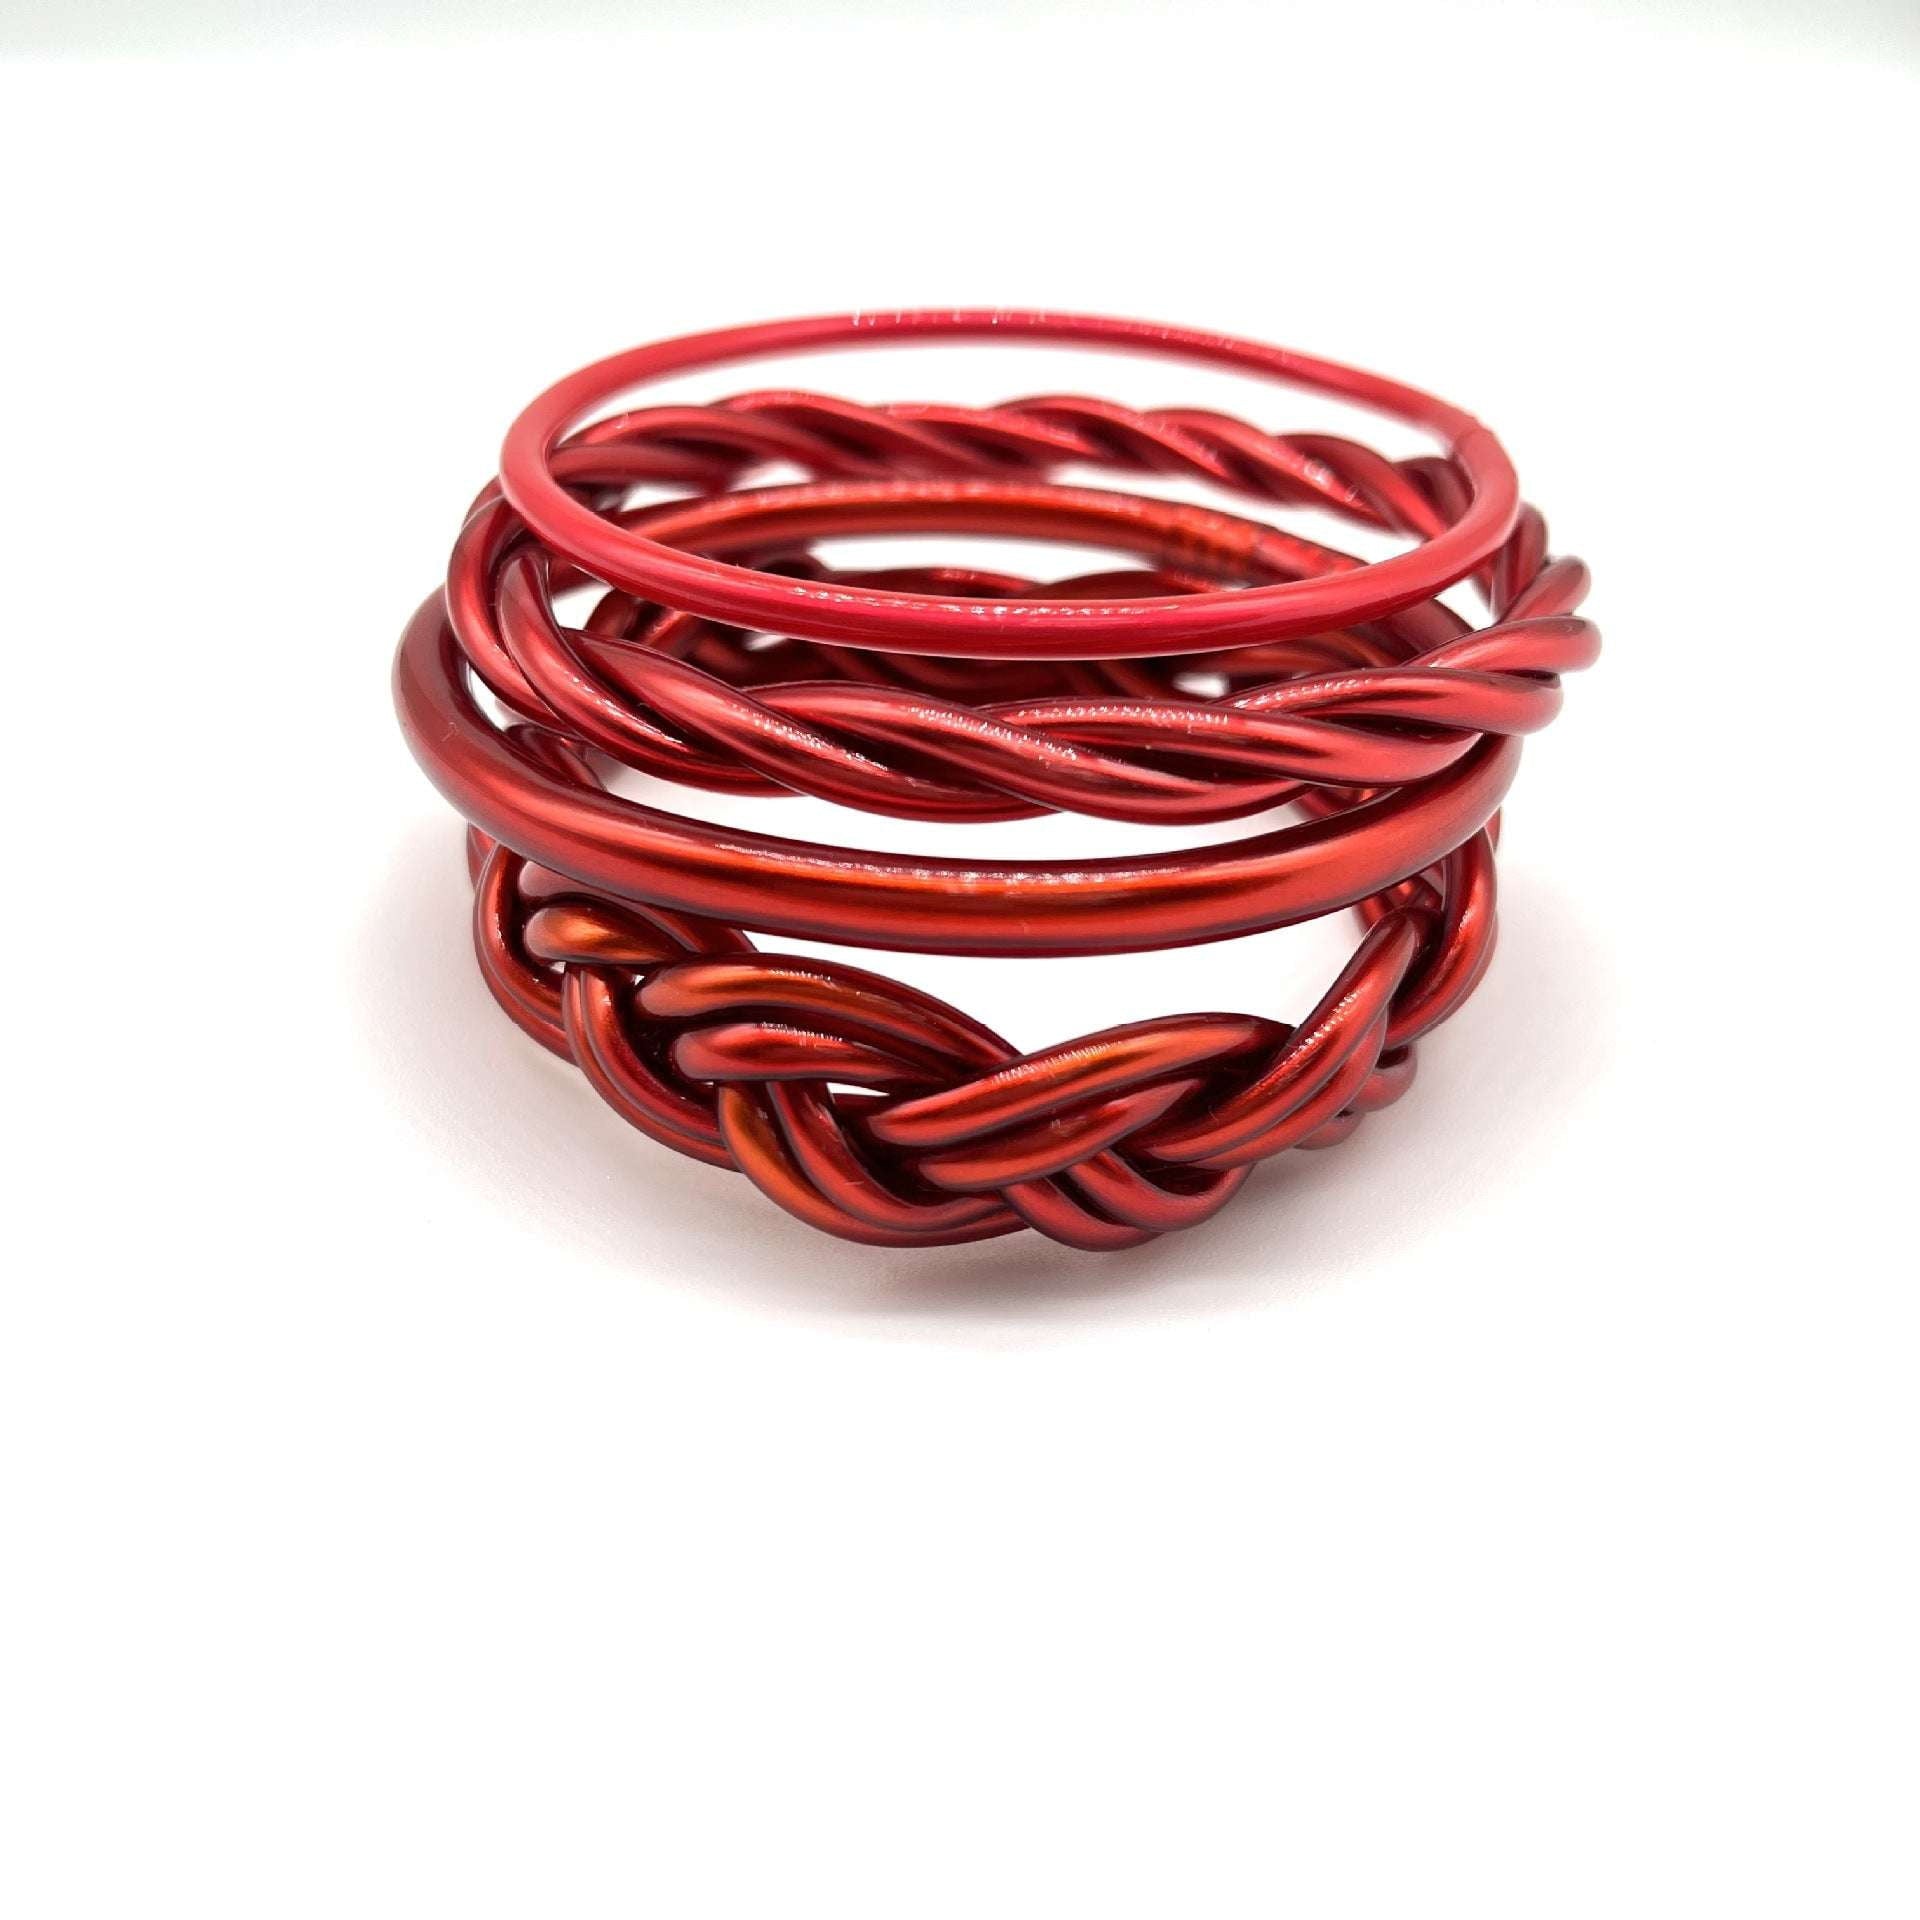 Stylish Silicone Bracelet, Twisted Metal Bracelet, Versatile Round Bracelet - available at Sparq Mart